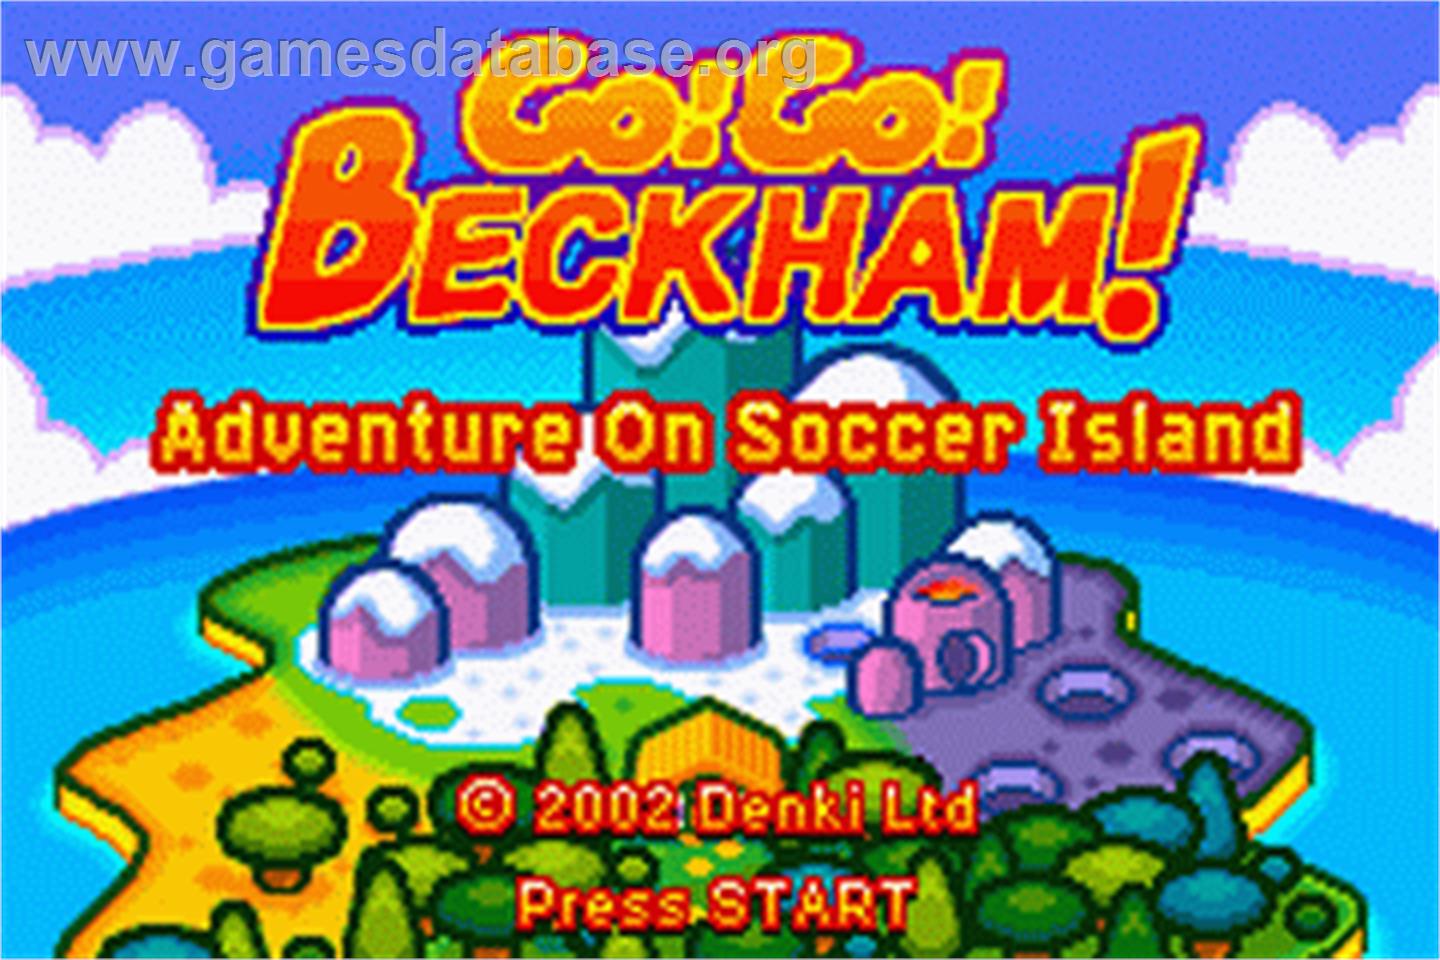 Go! Go! Beckham! Adventure of Soccer Island - Nintendo Game Boy Advance - Artwork - Title Screen